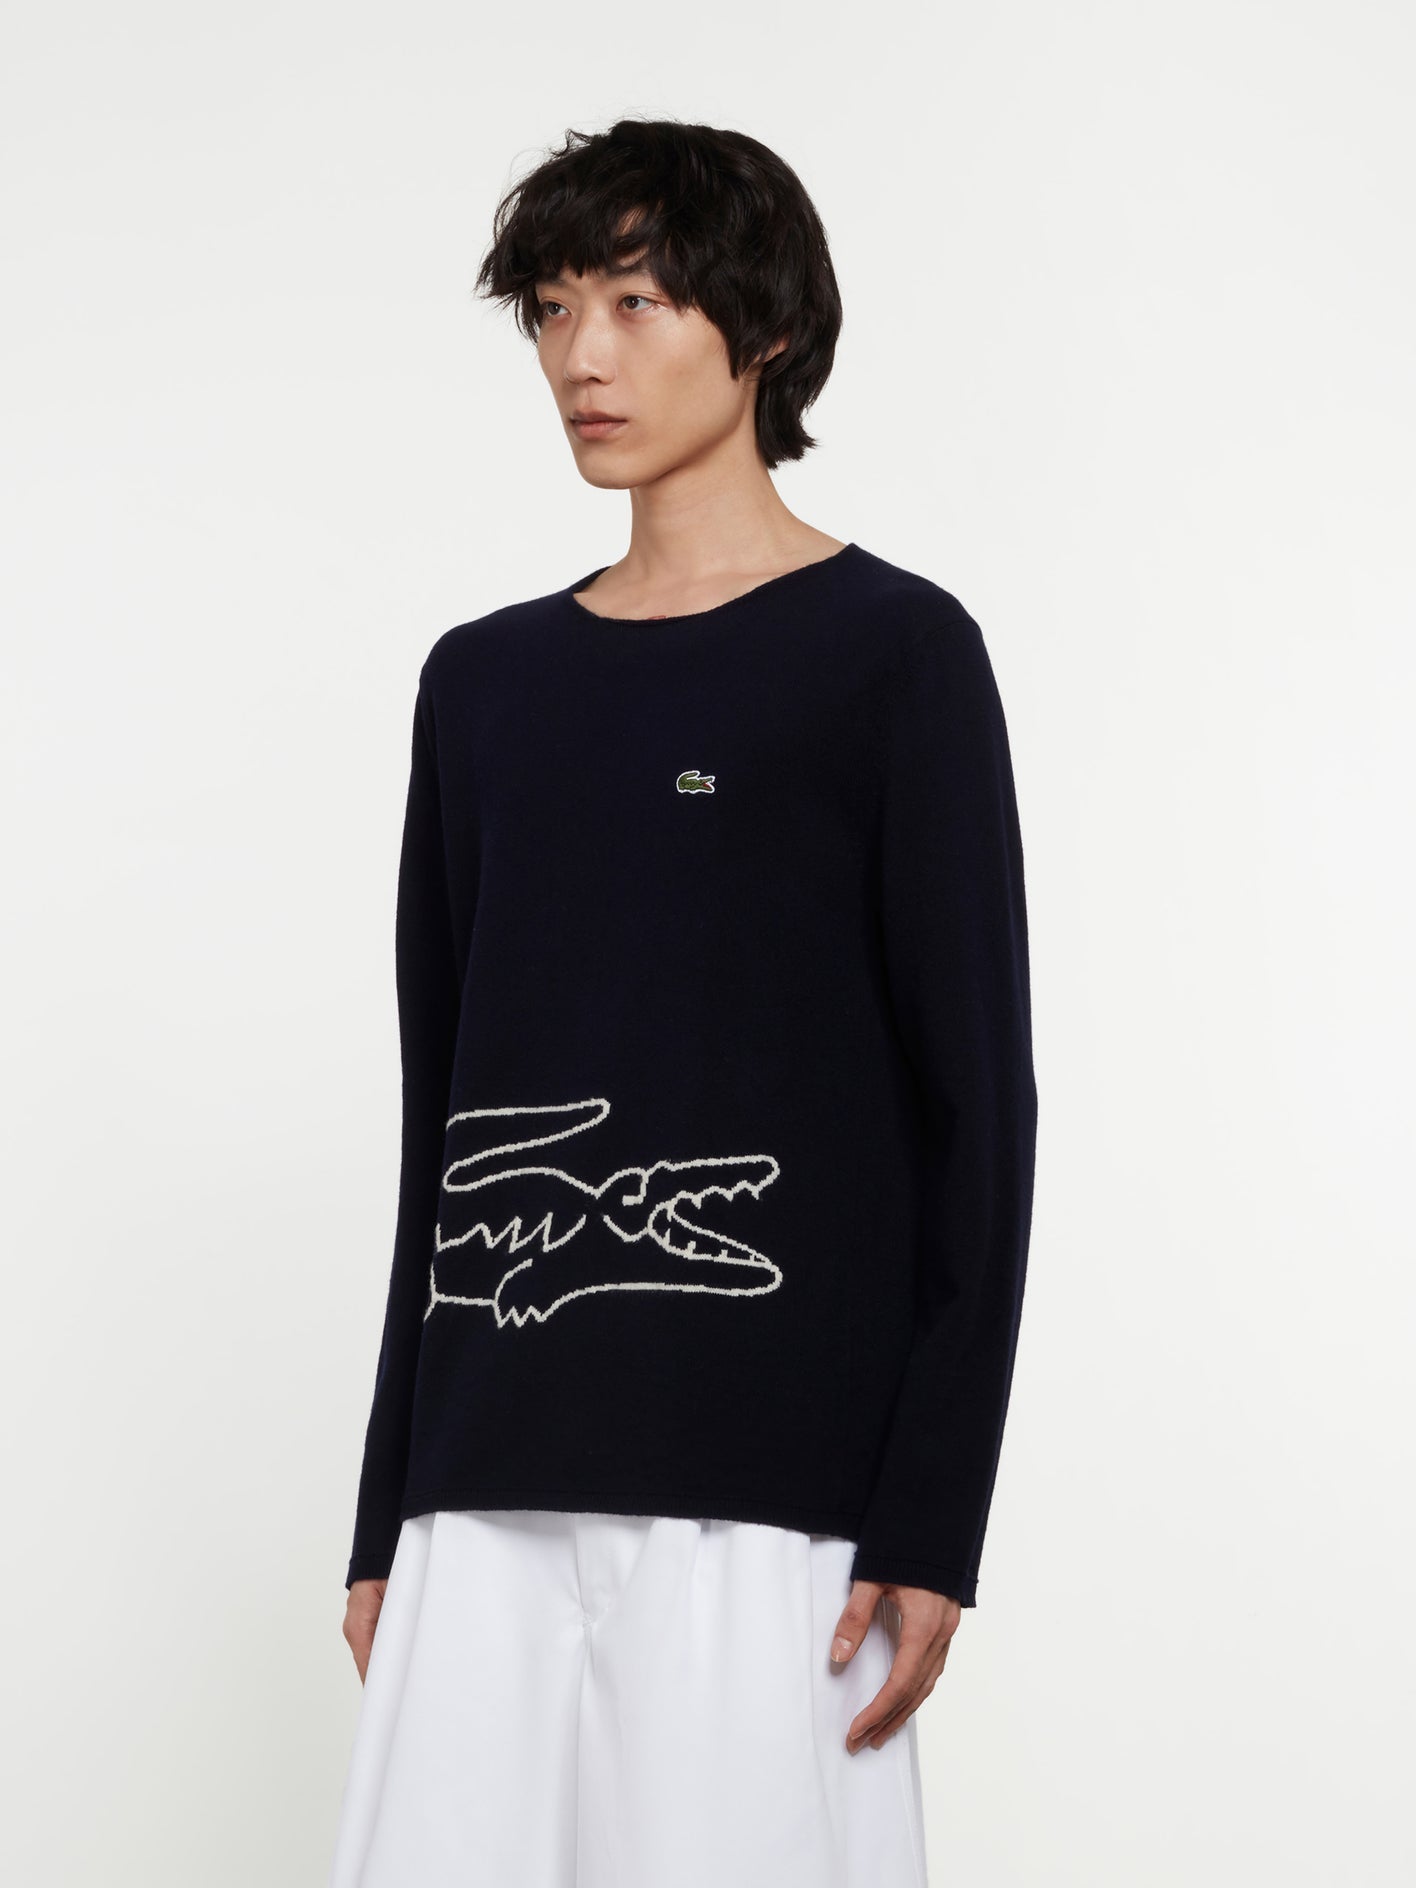 CDG Shirt x Lacoste / Men's Knit Sweater